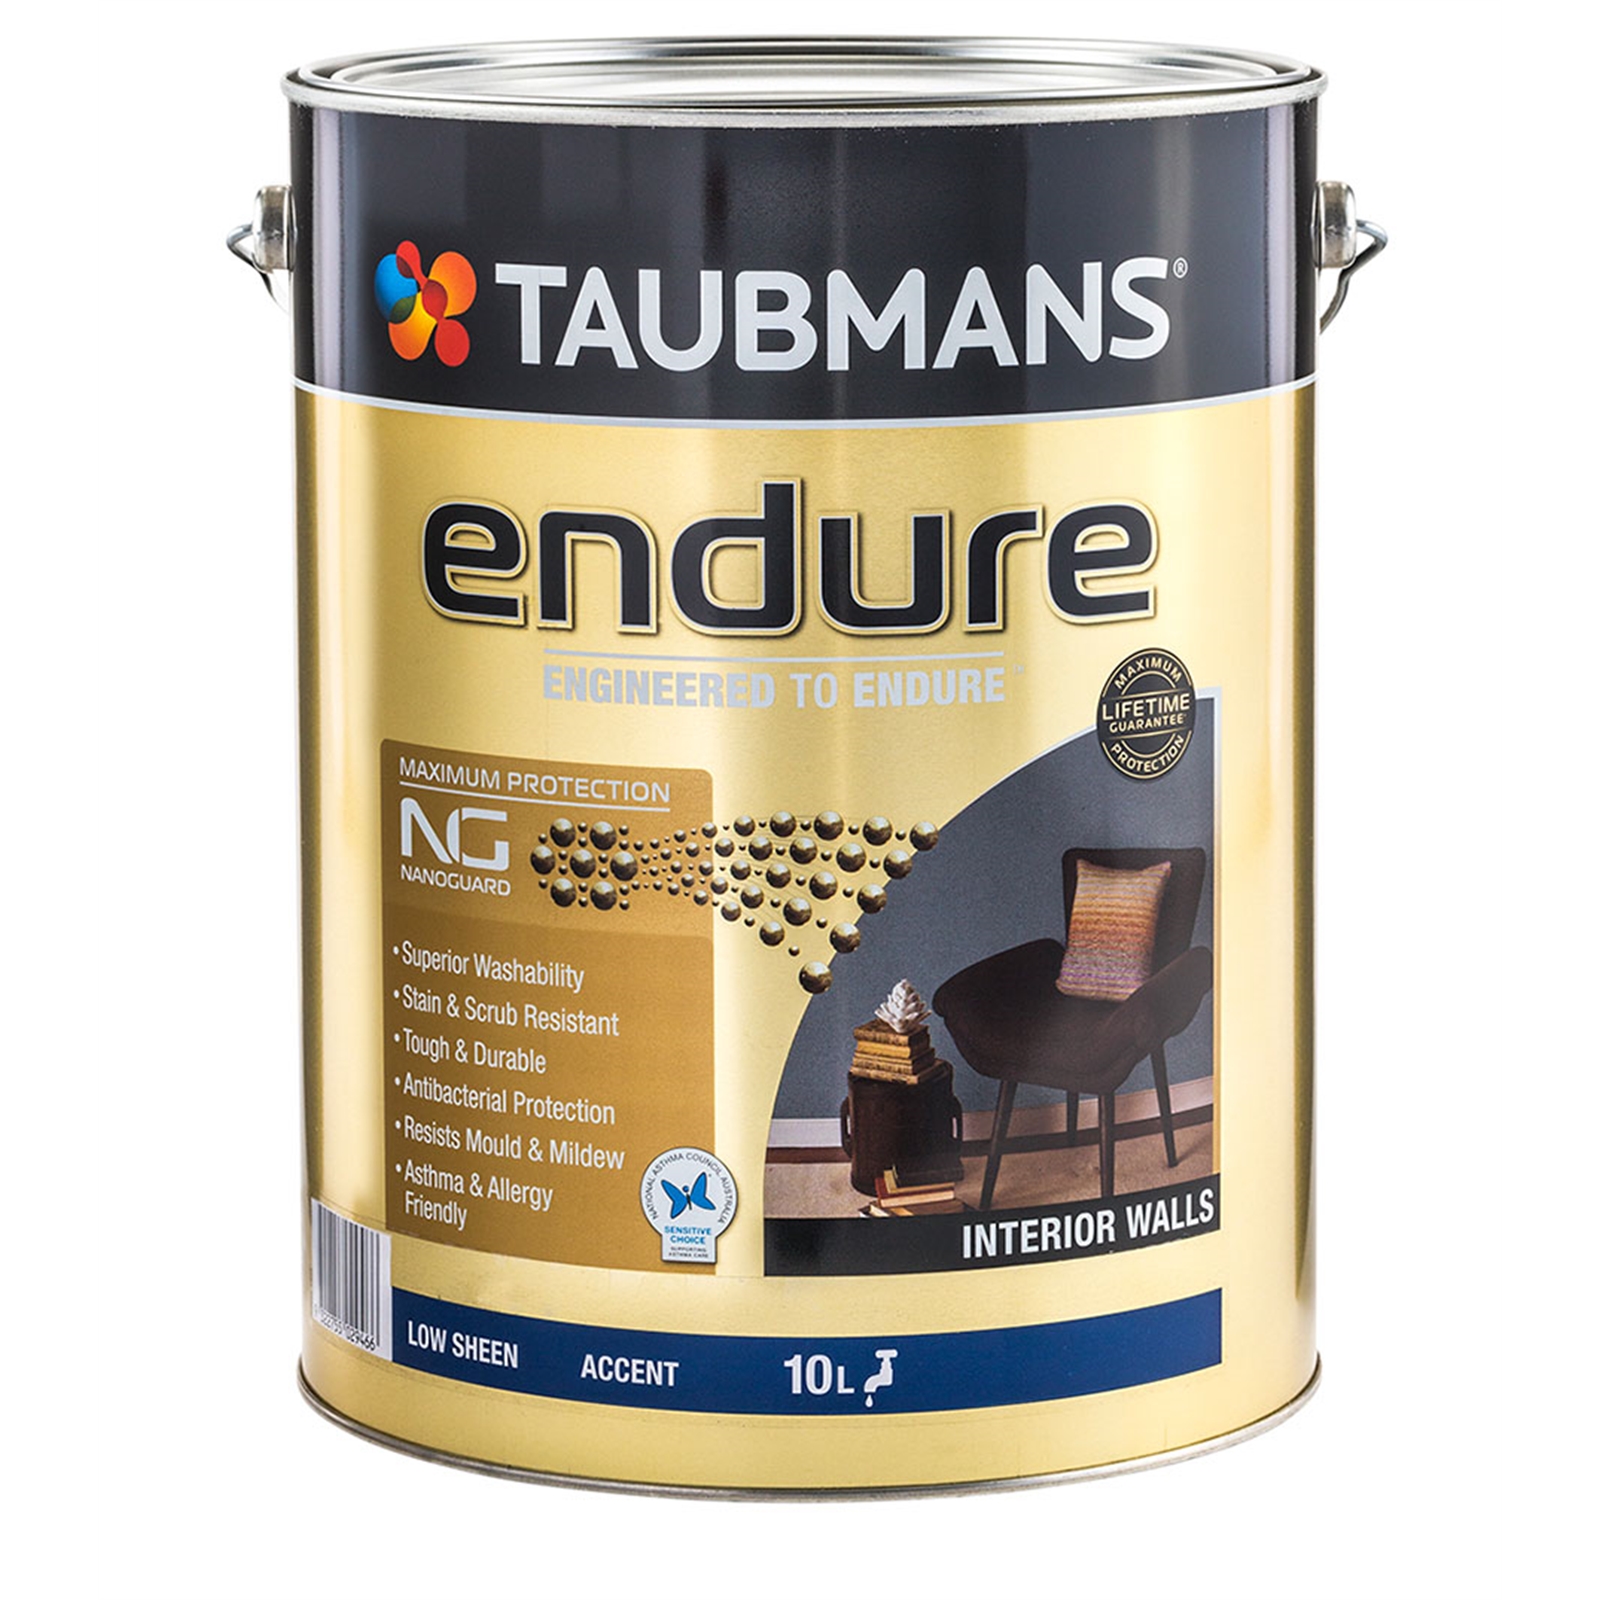 Taubmans Endure 10L Accent Low Sheen Interior Walls